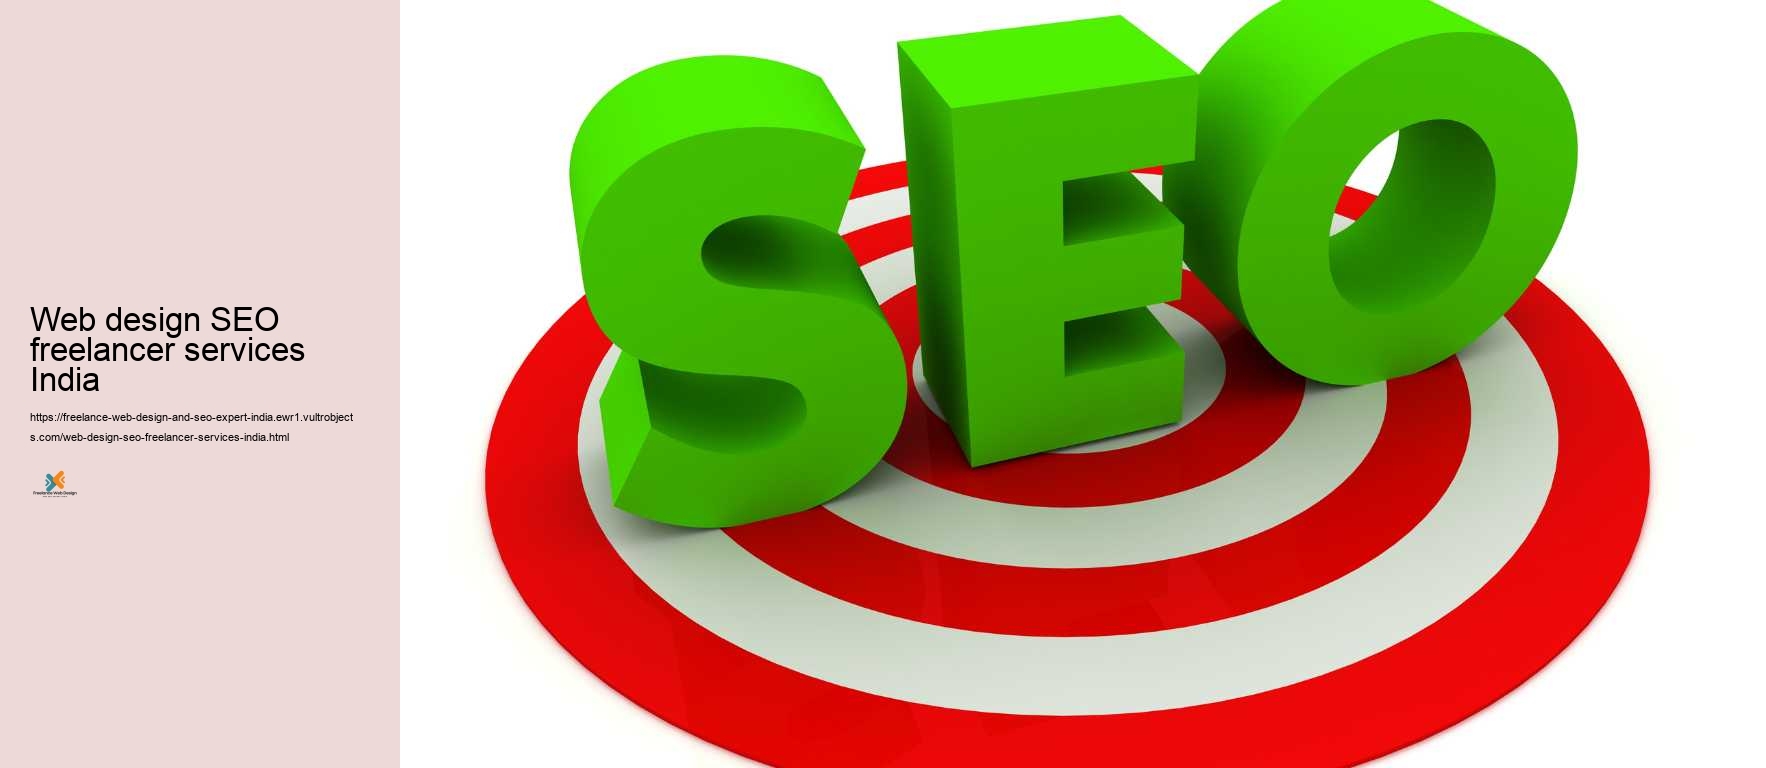 Web design SEO freelancer services India